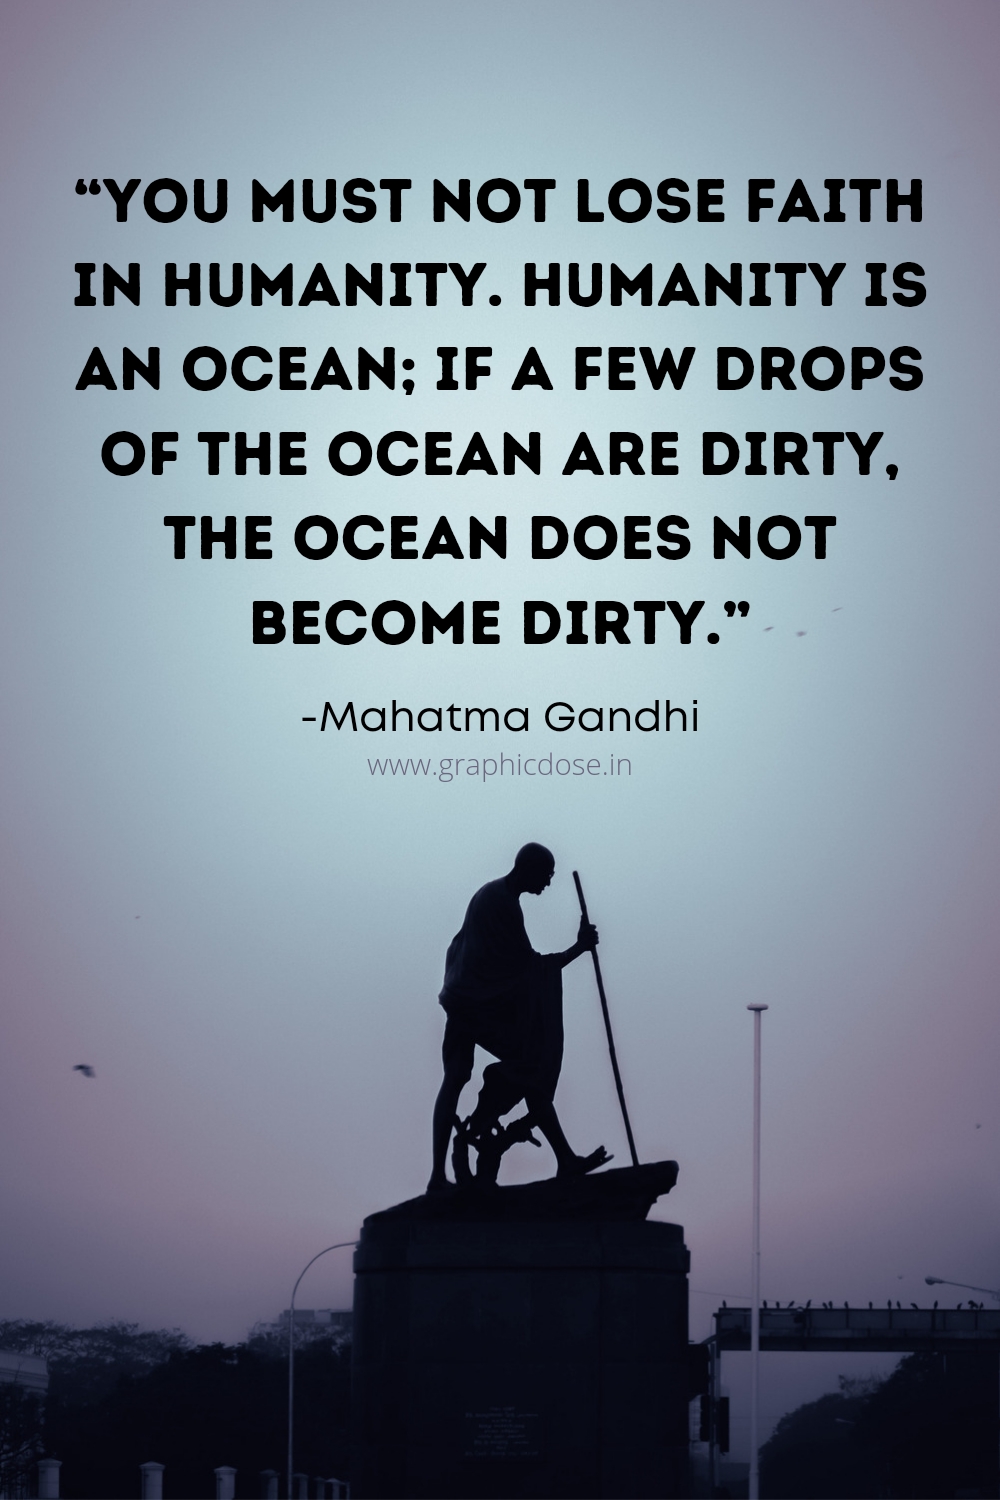 Mahatma Gandhi's Quote on humanity